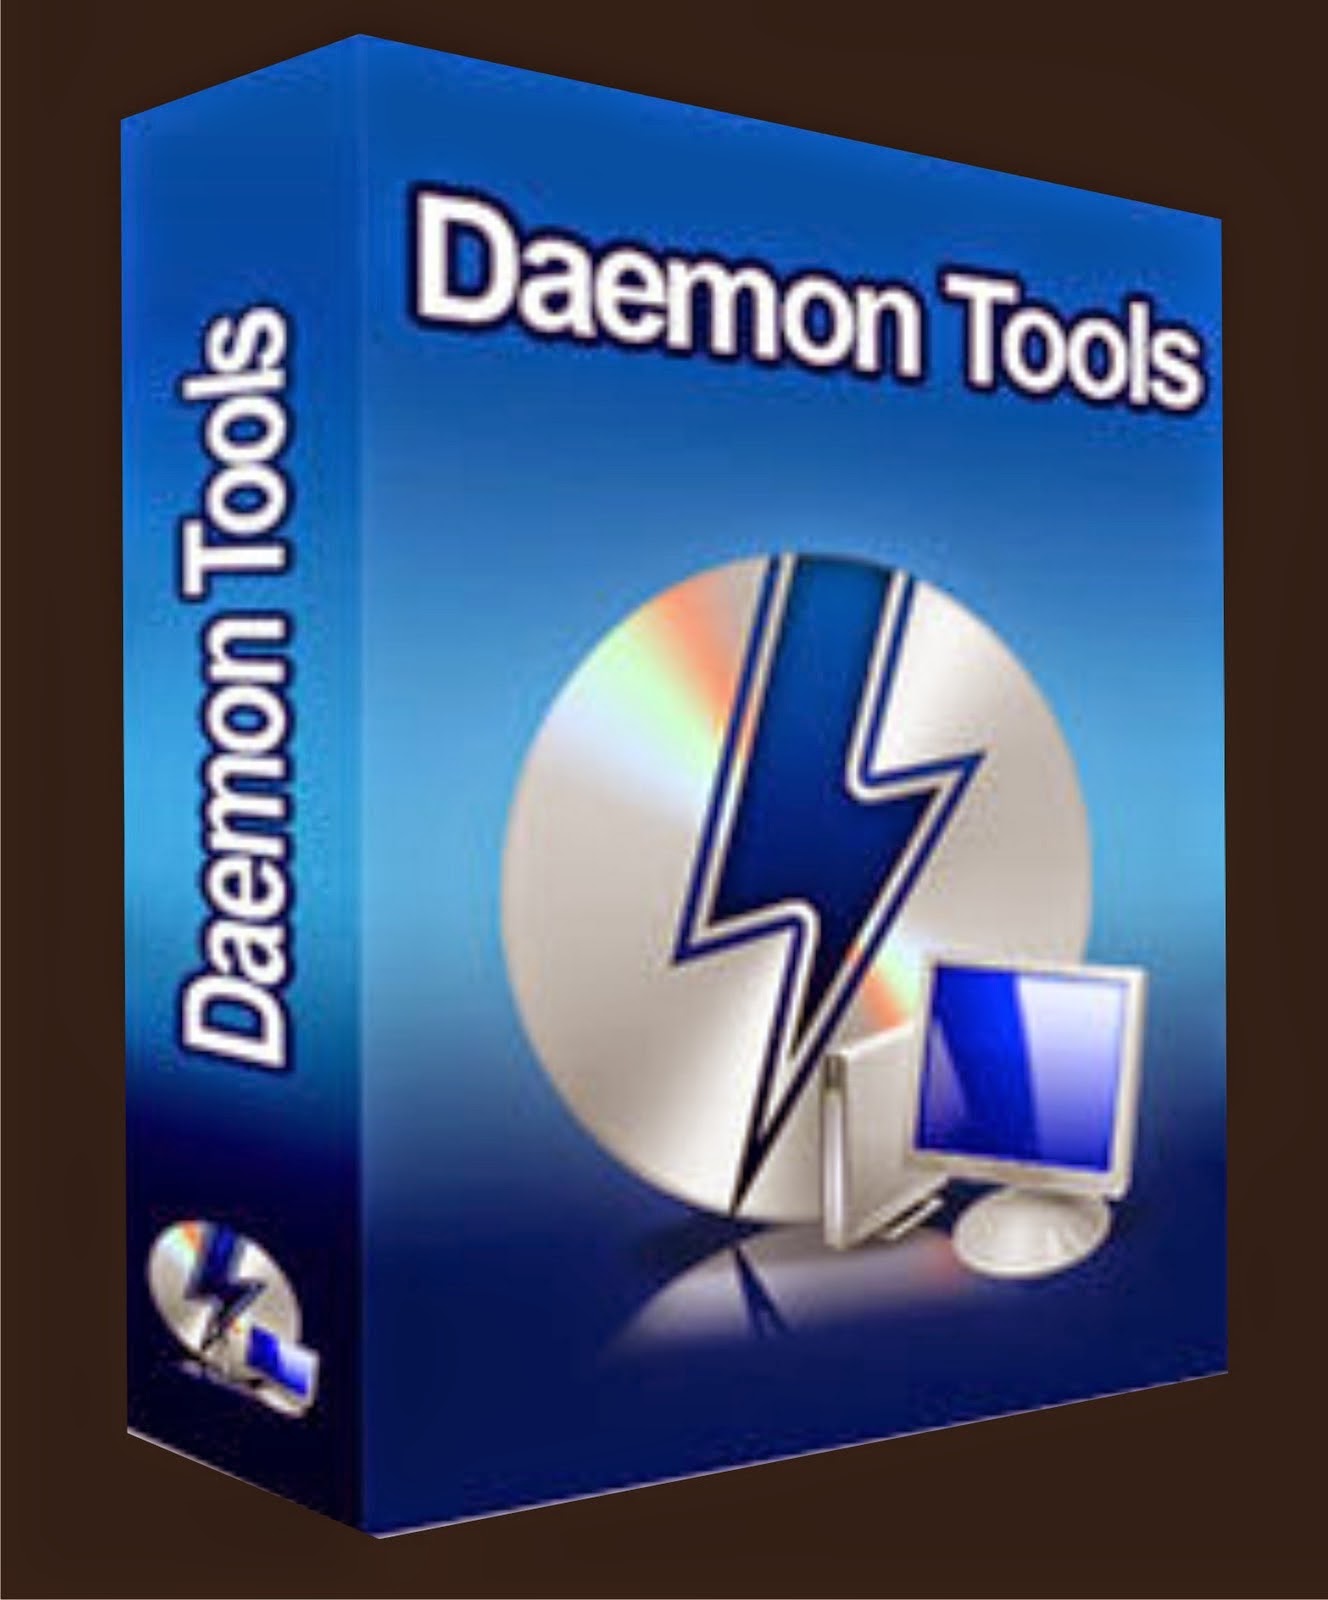 daemon tools free download com